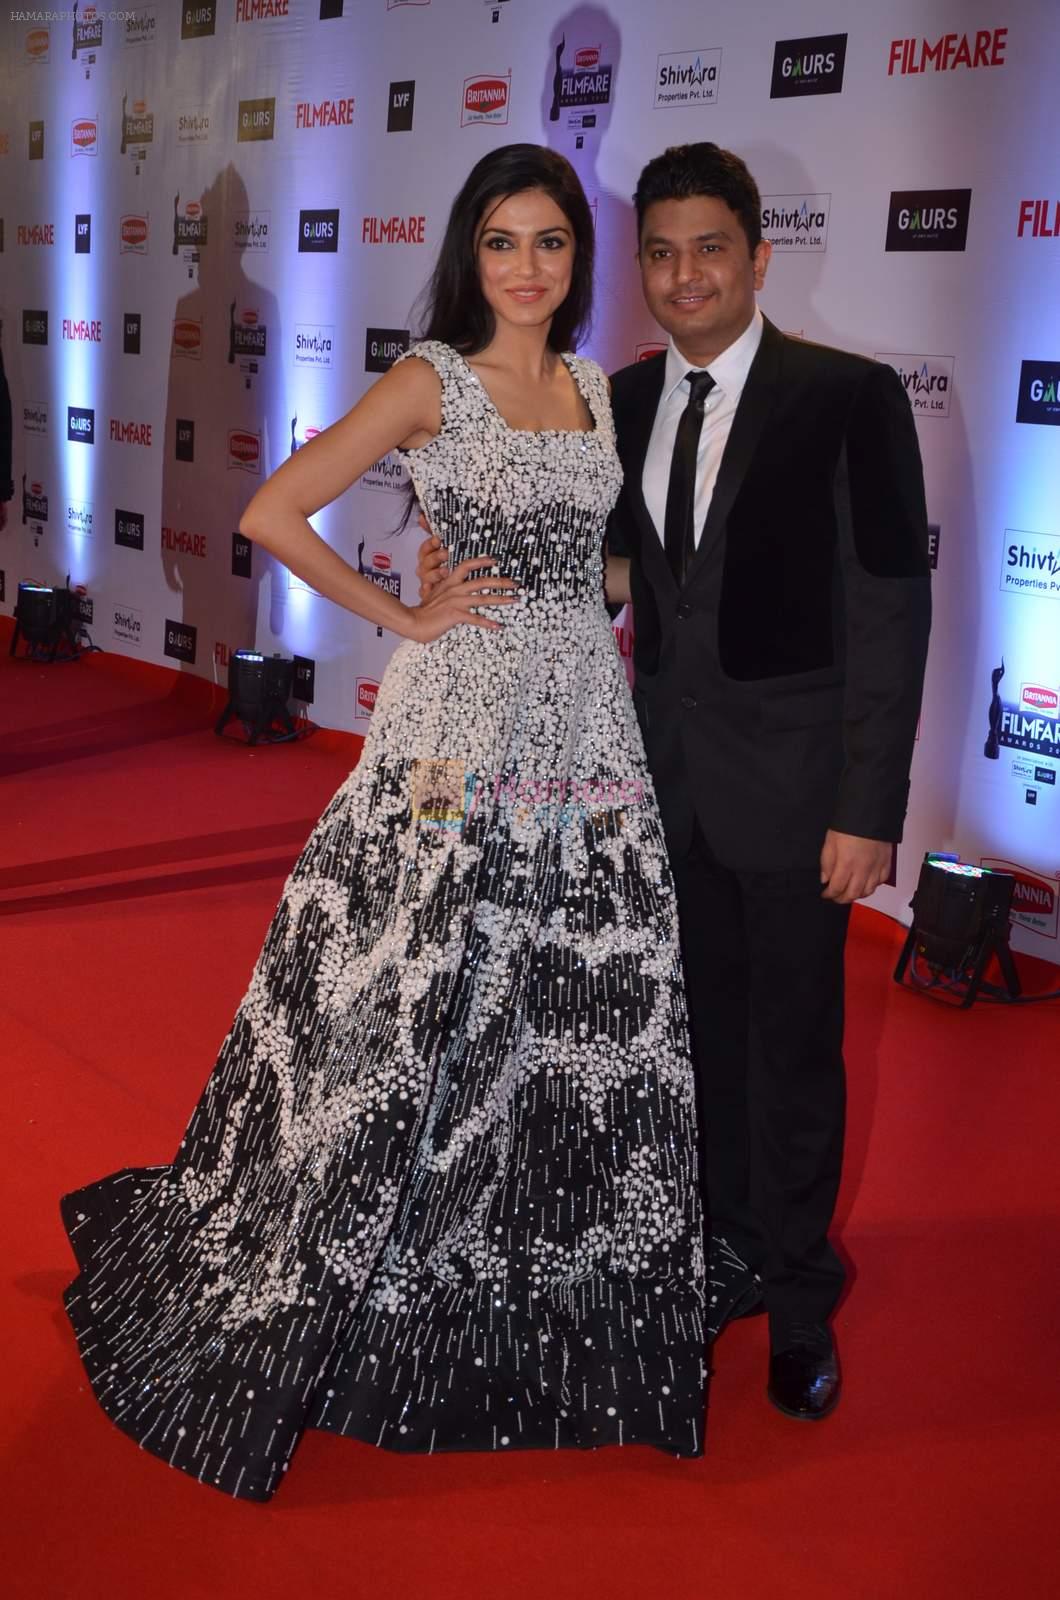 Divya Kumar at Filmfare Awards 2016 on 15th Jan 2016